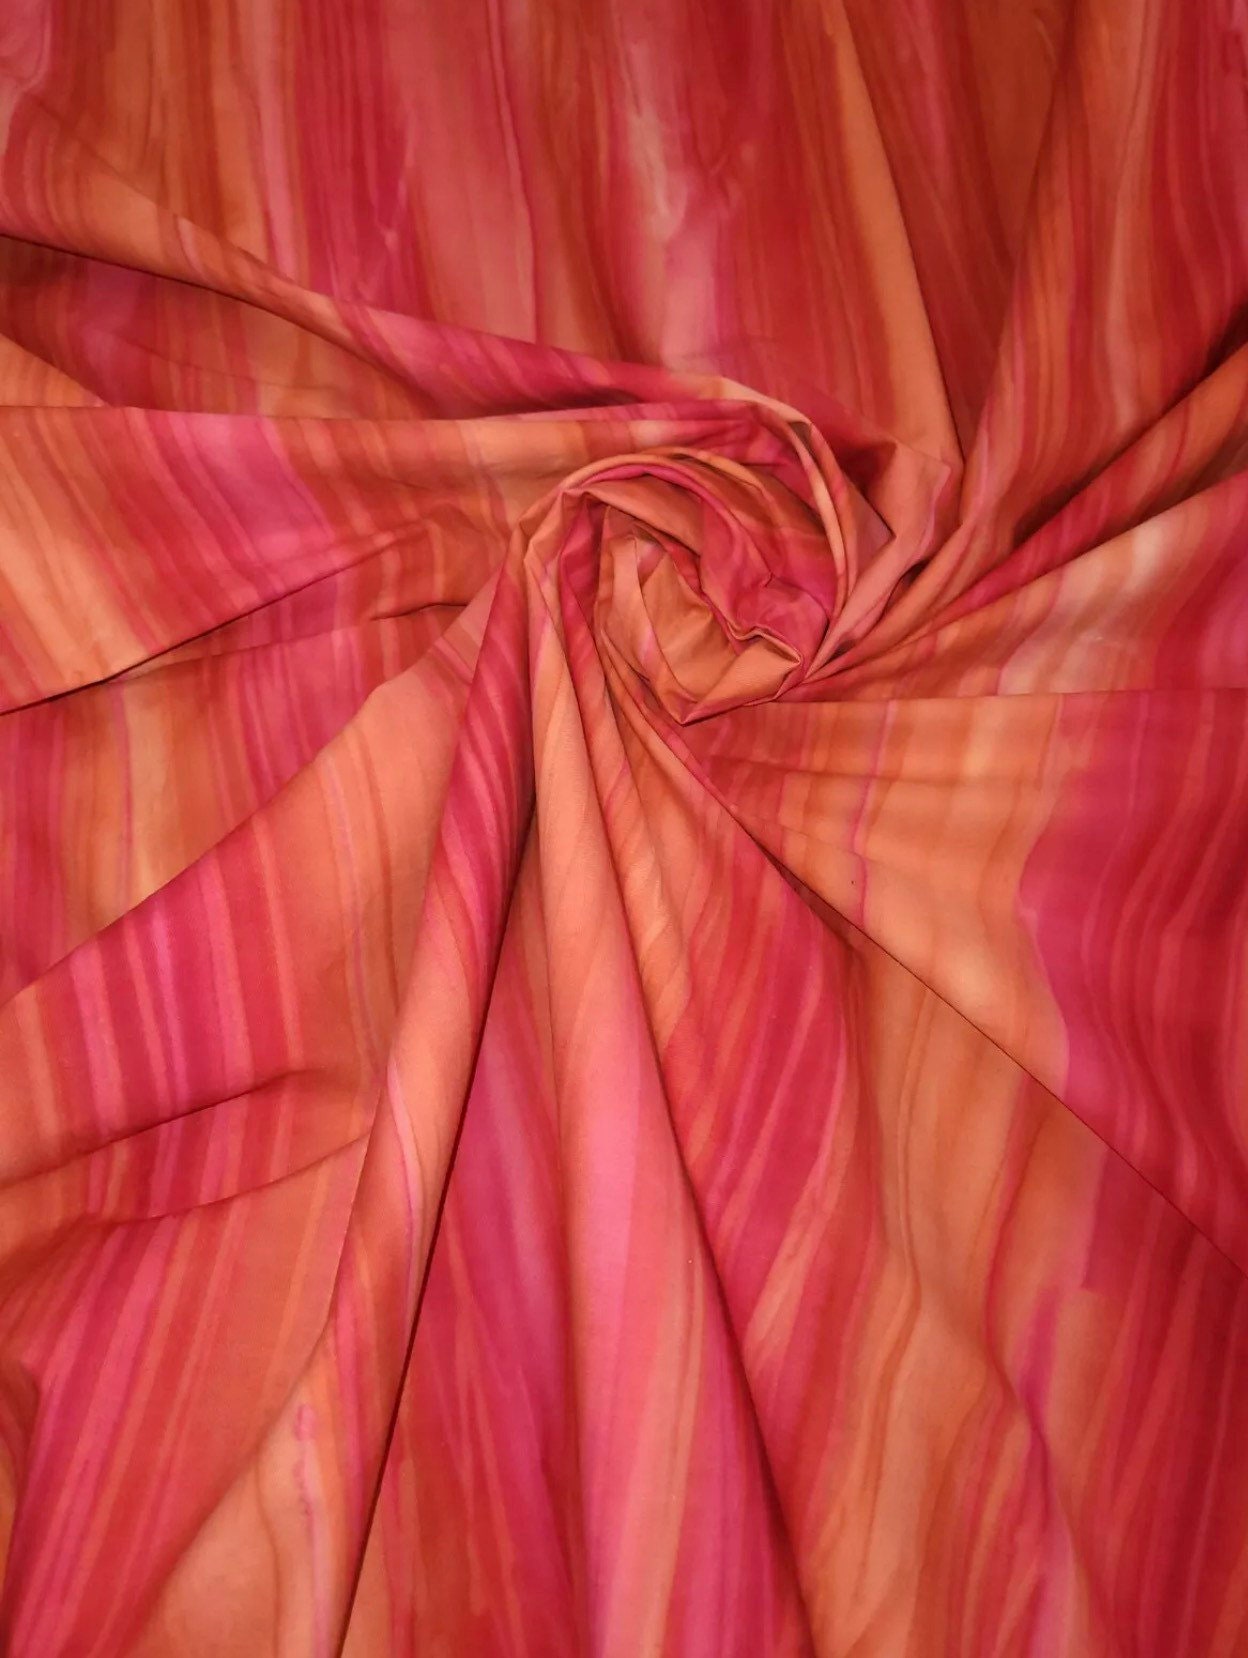 1m hotpink  head wrap craftBatik 100% Fabric  African Print tye dye fabric 45 " 